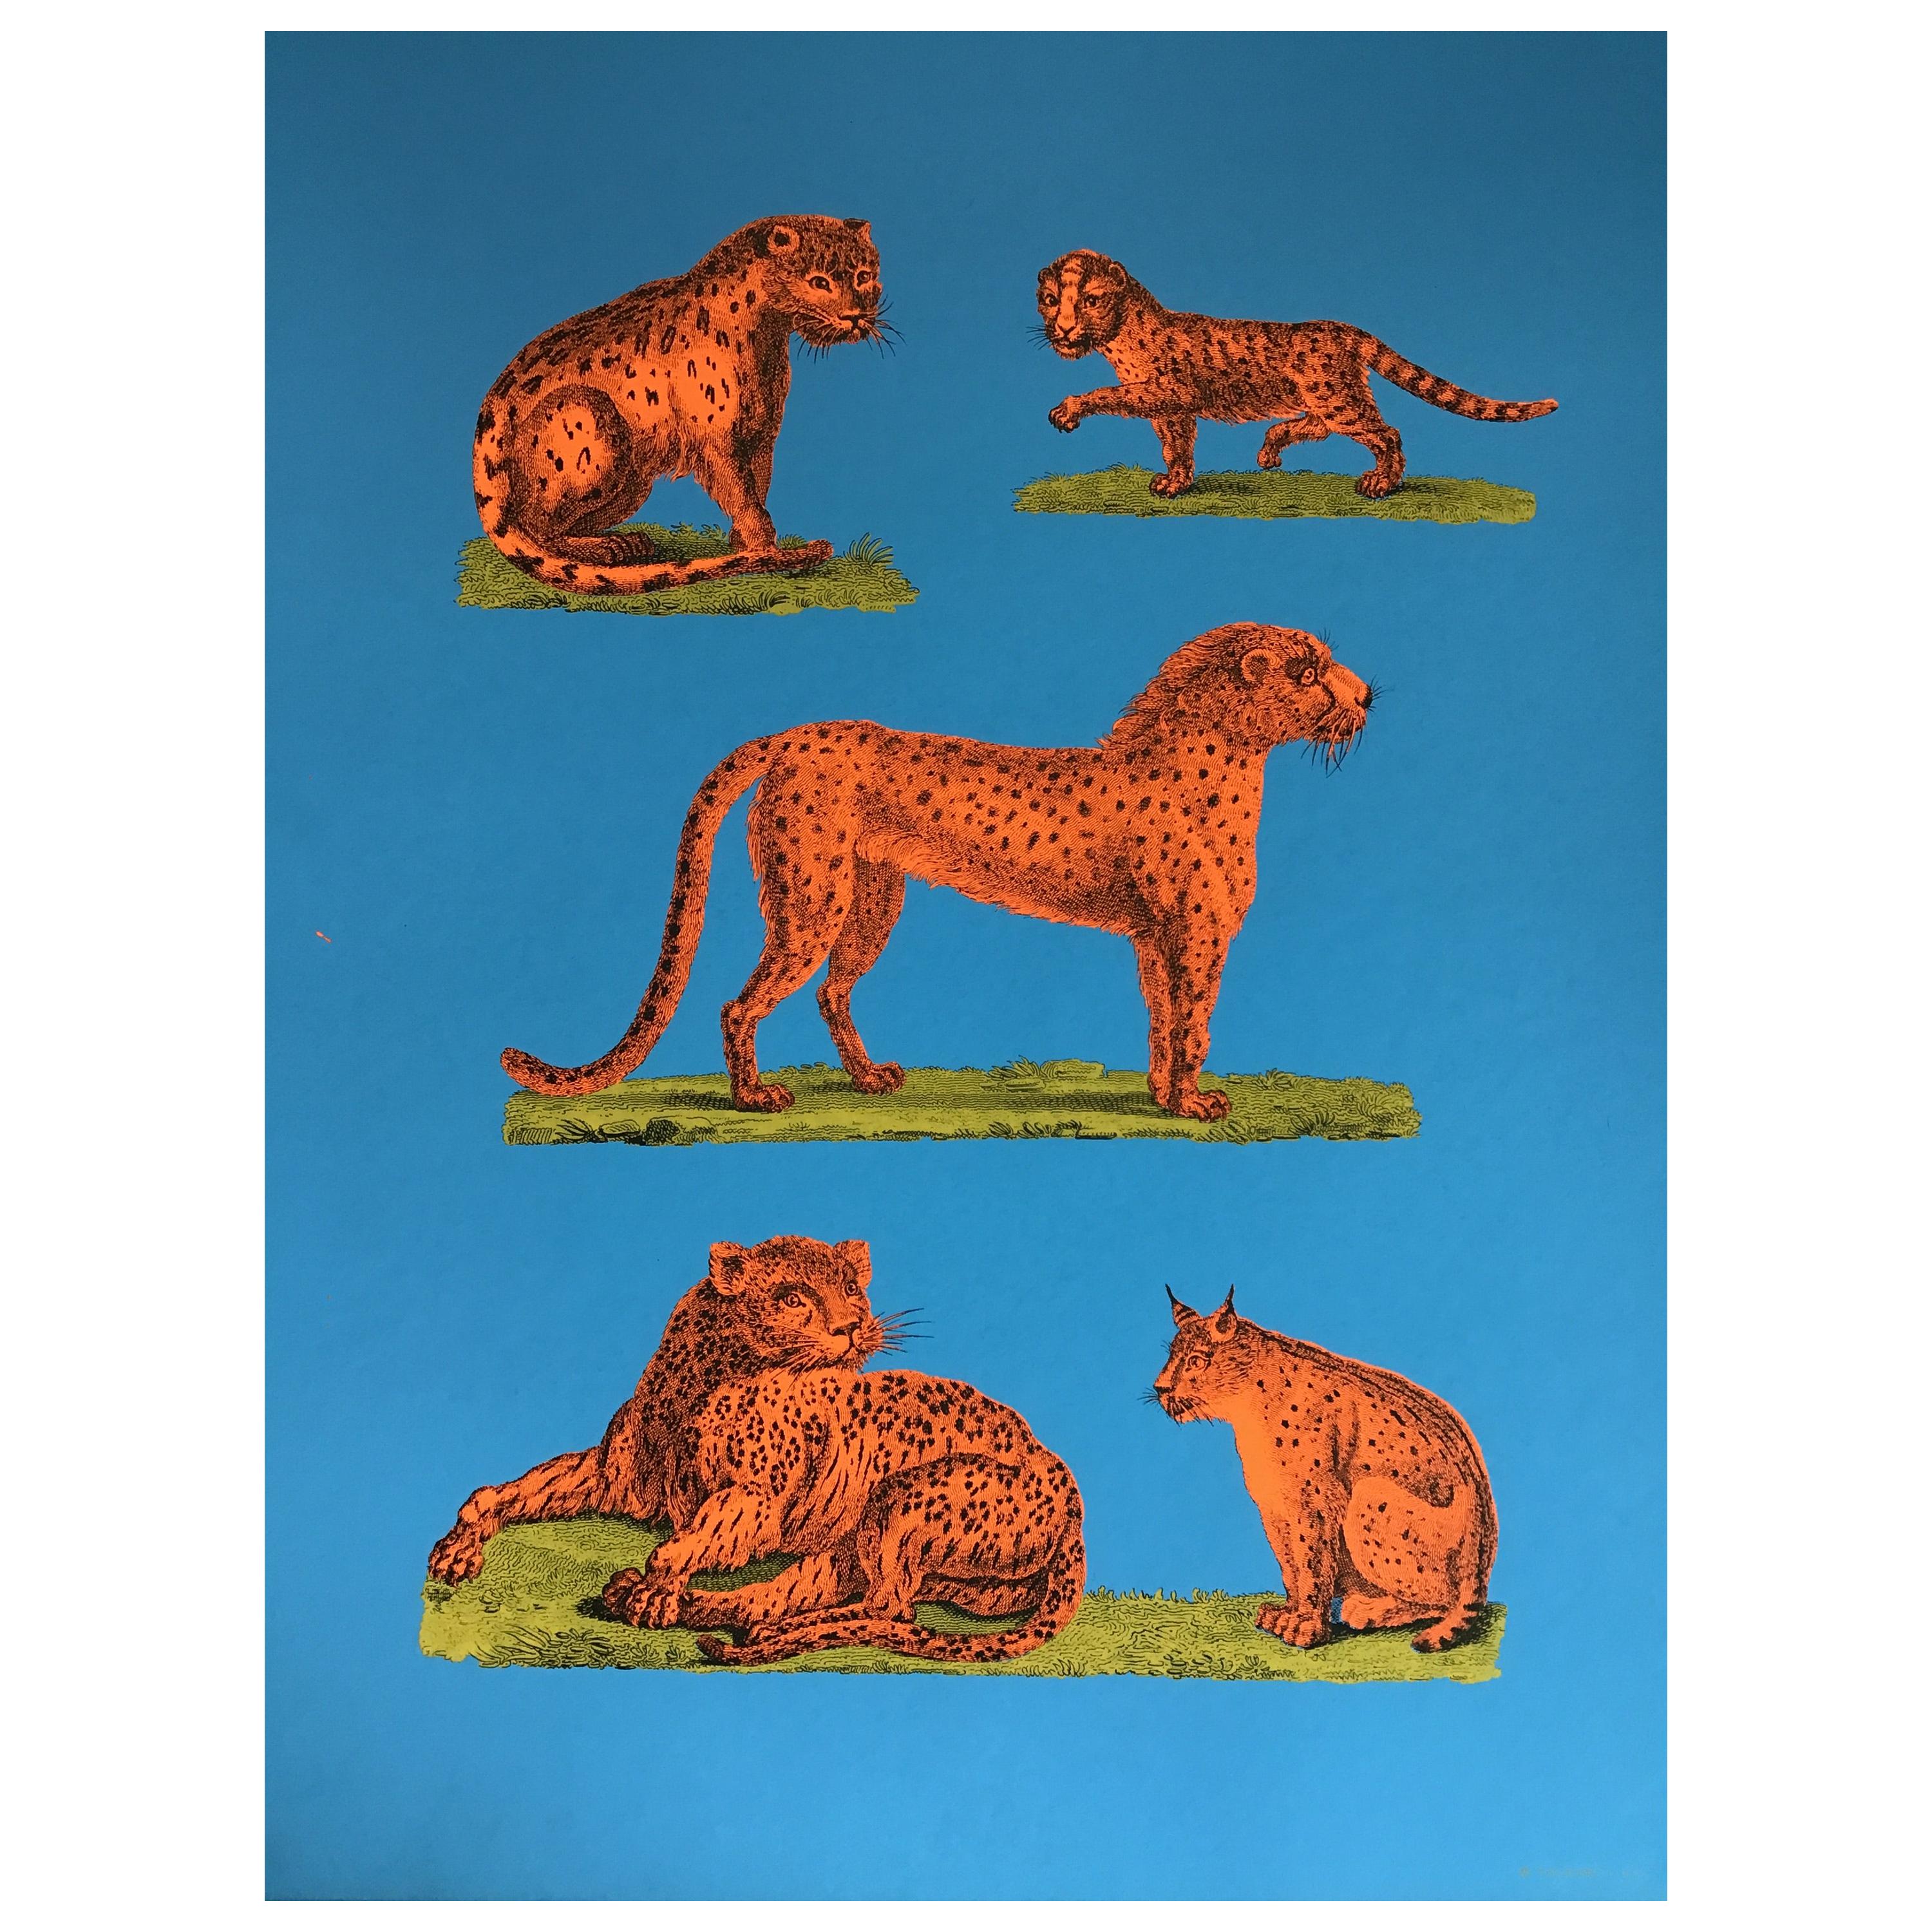 1970s Tiber Press Cheetah Lithographs